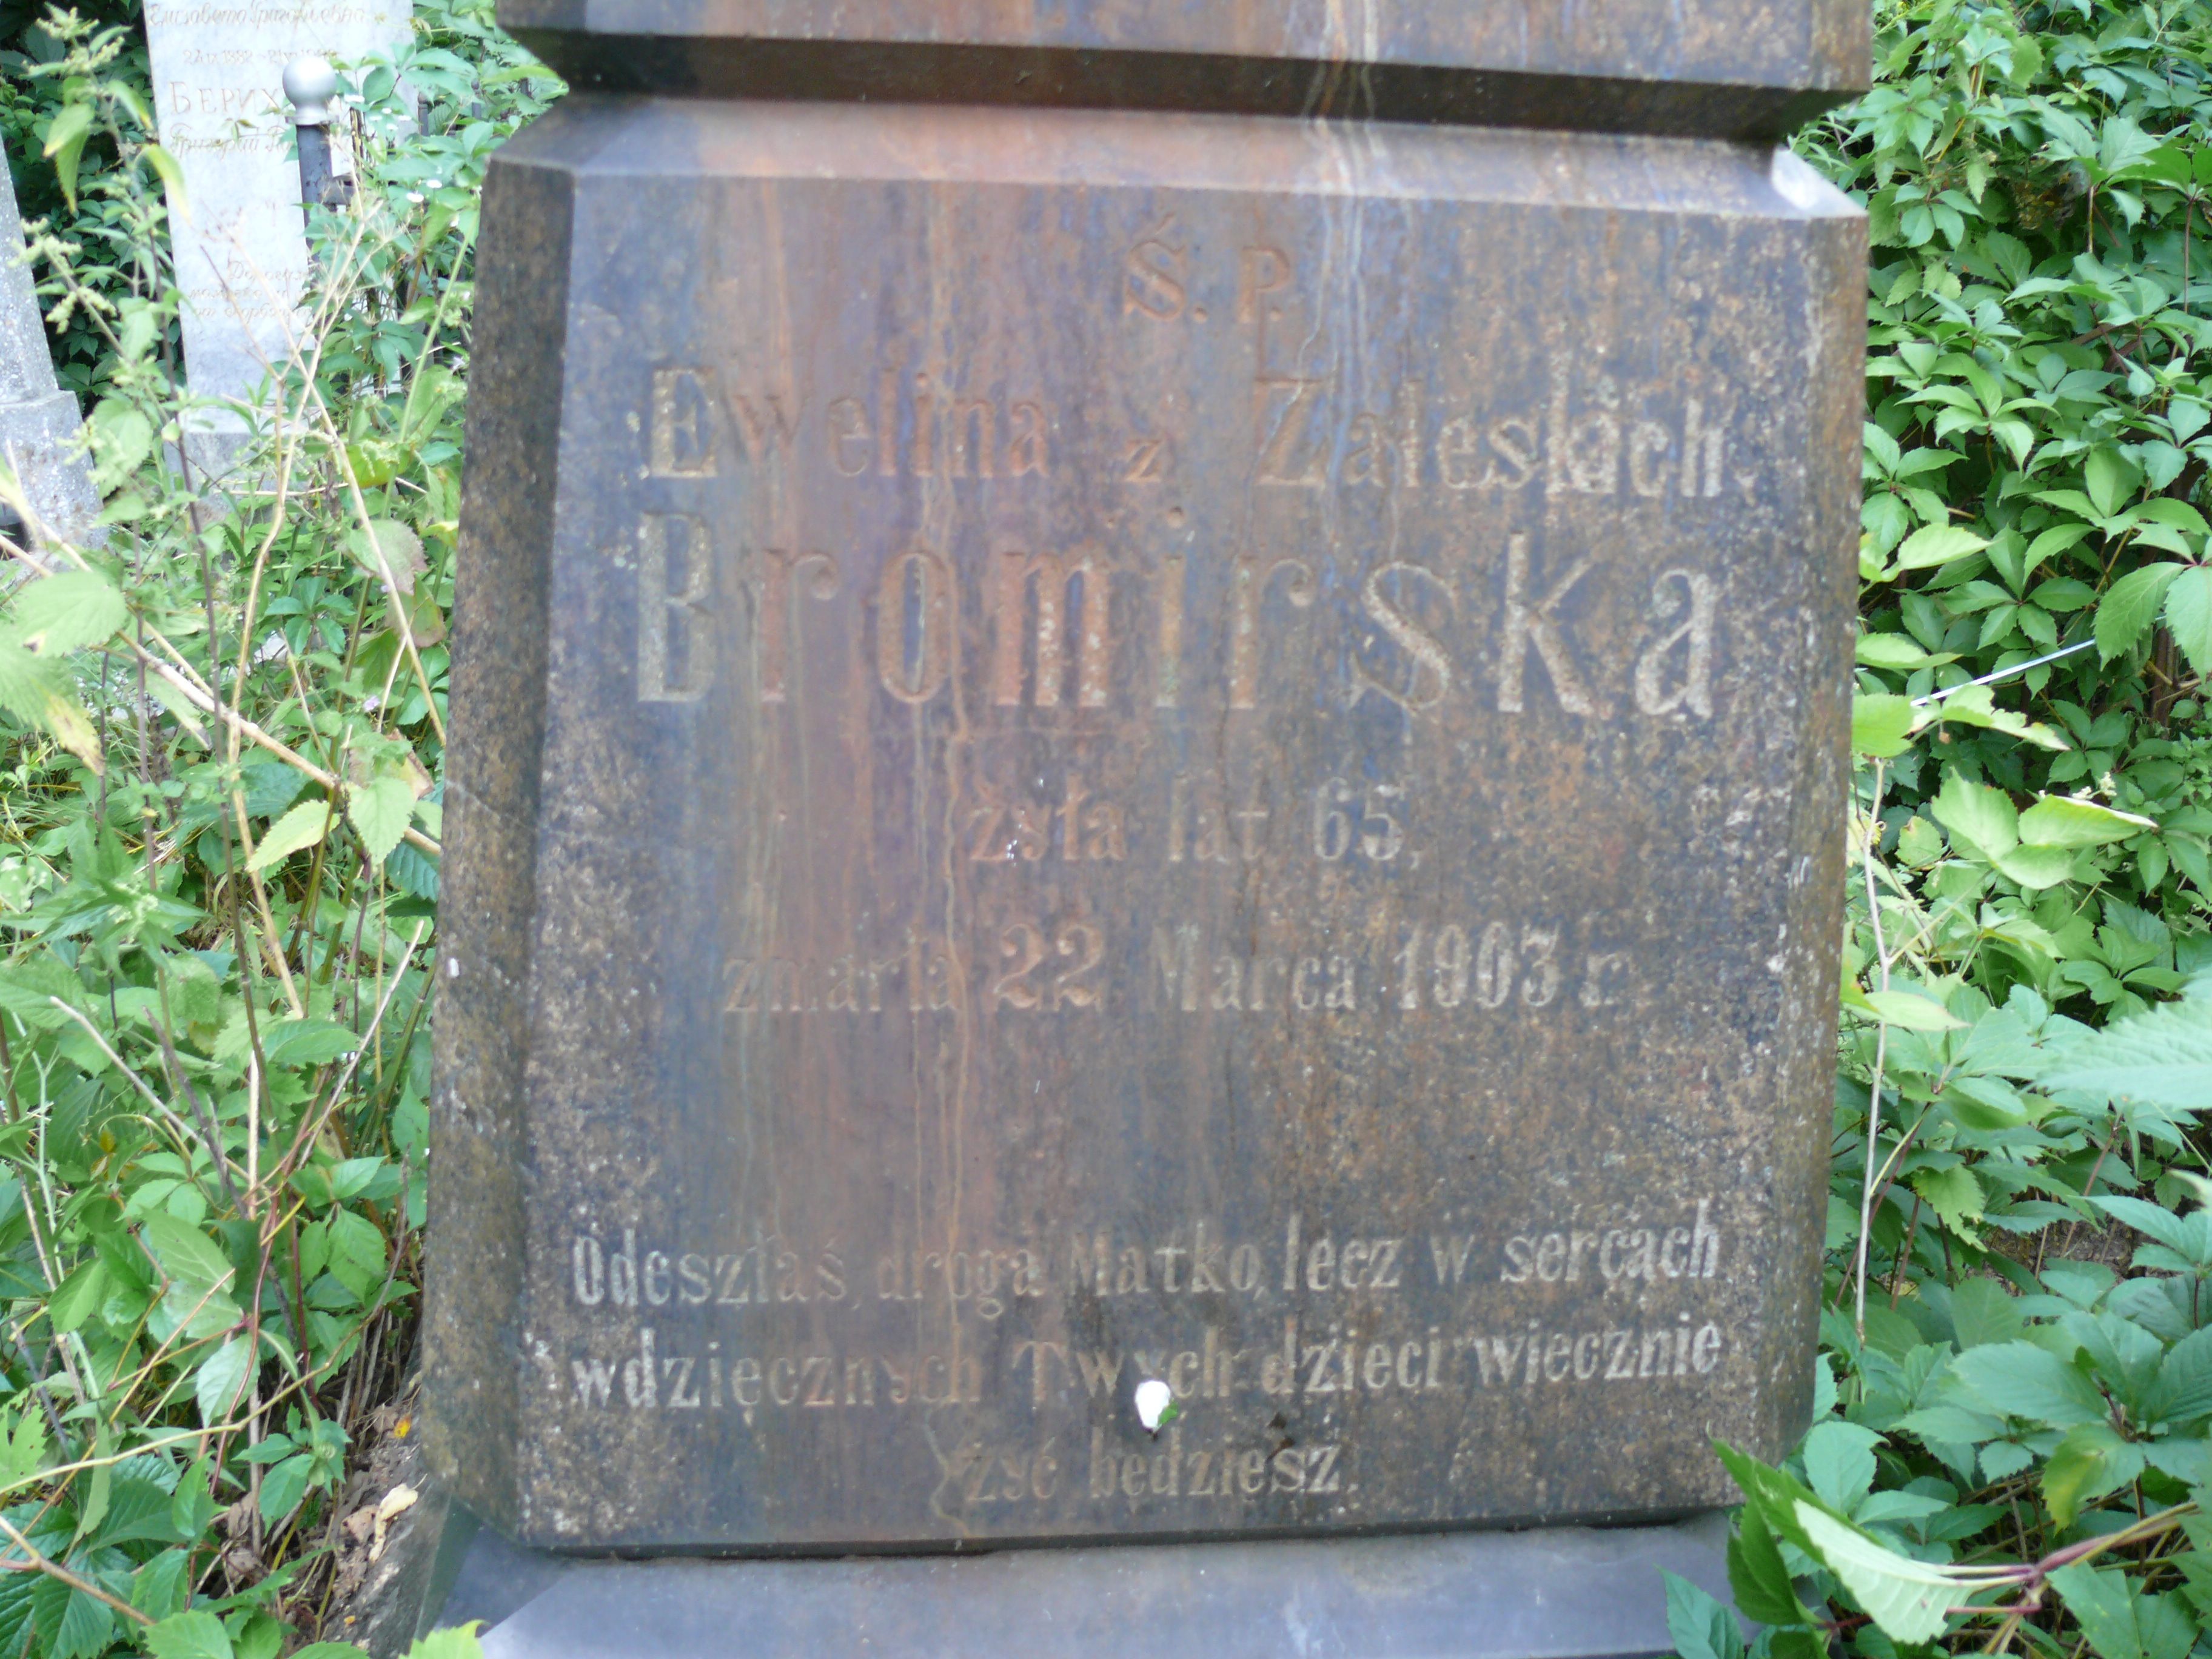 Inscription from the gravestone of Ewelina Boromirska